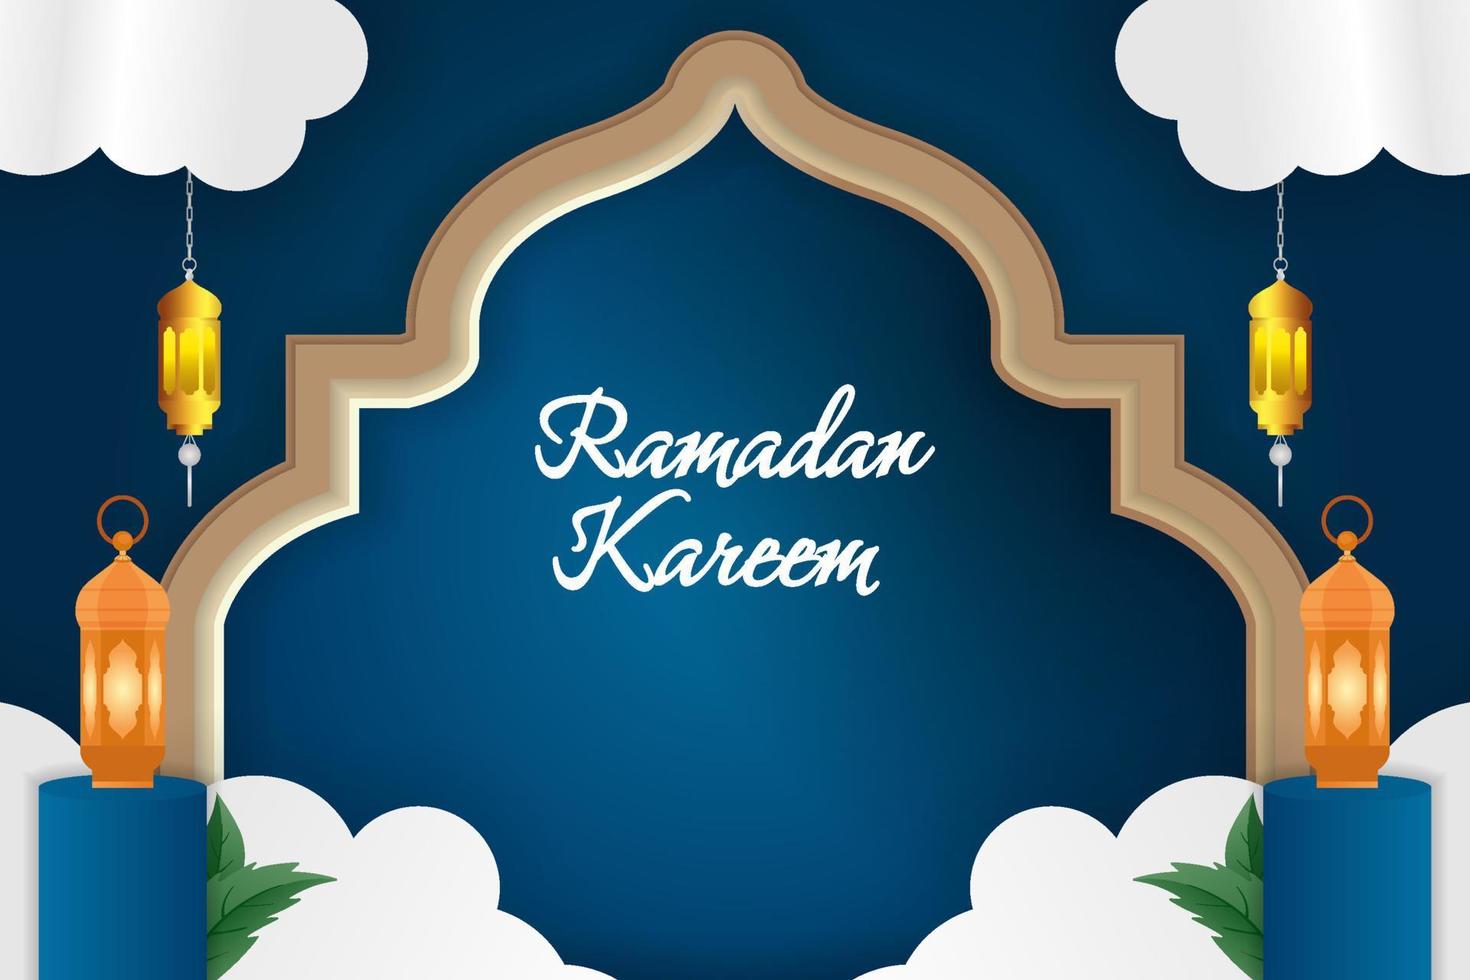 Ramadan Kareem Islamic background with element vector